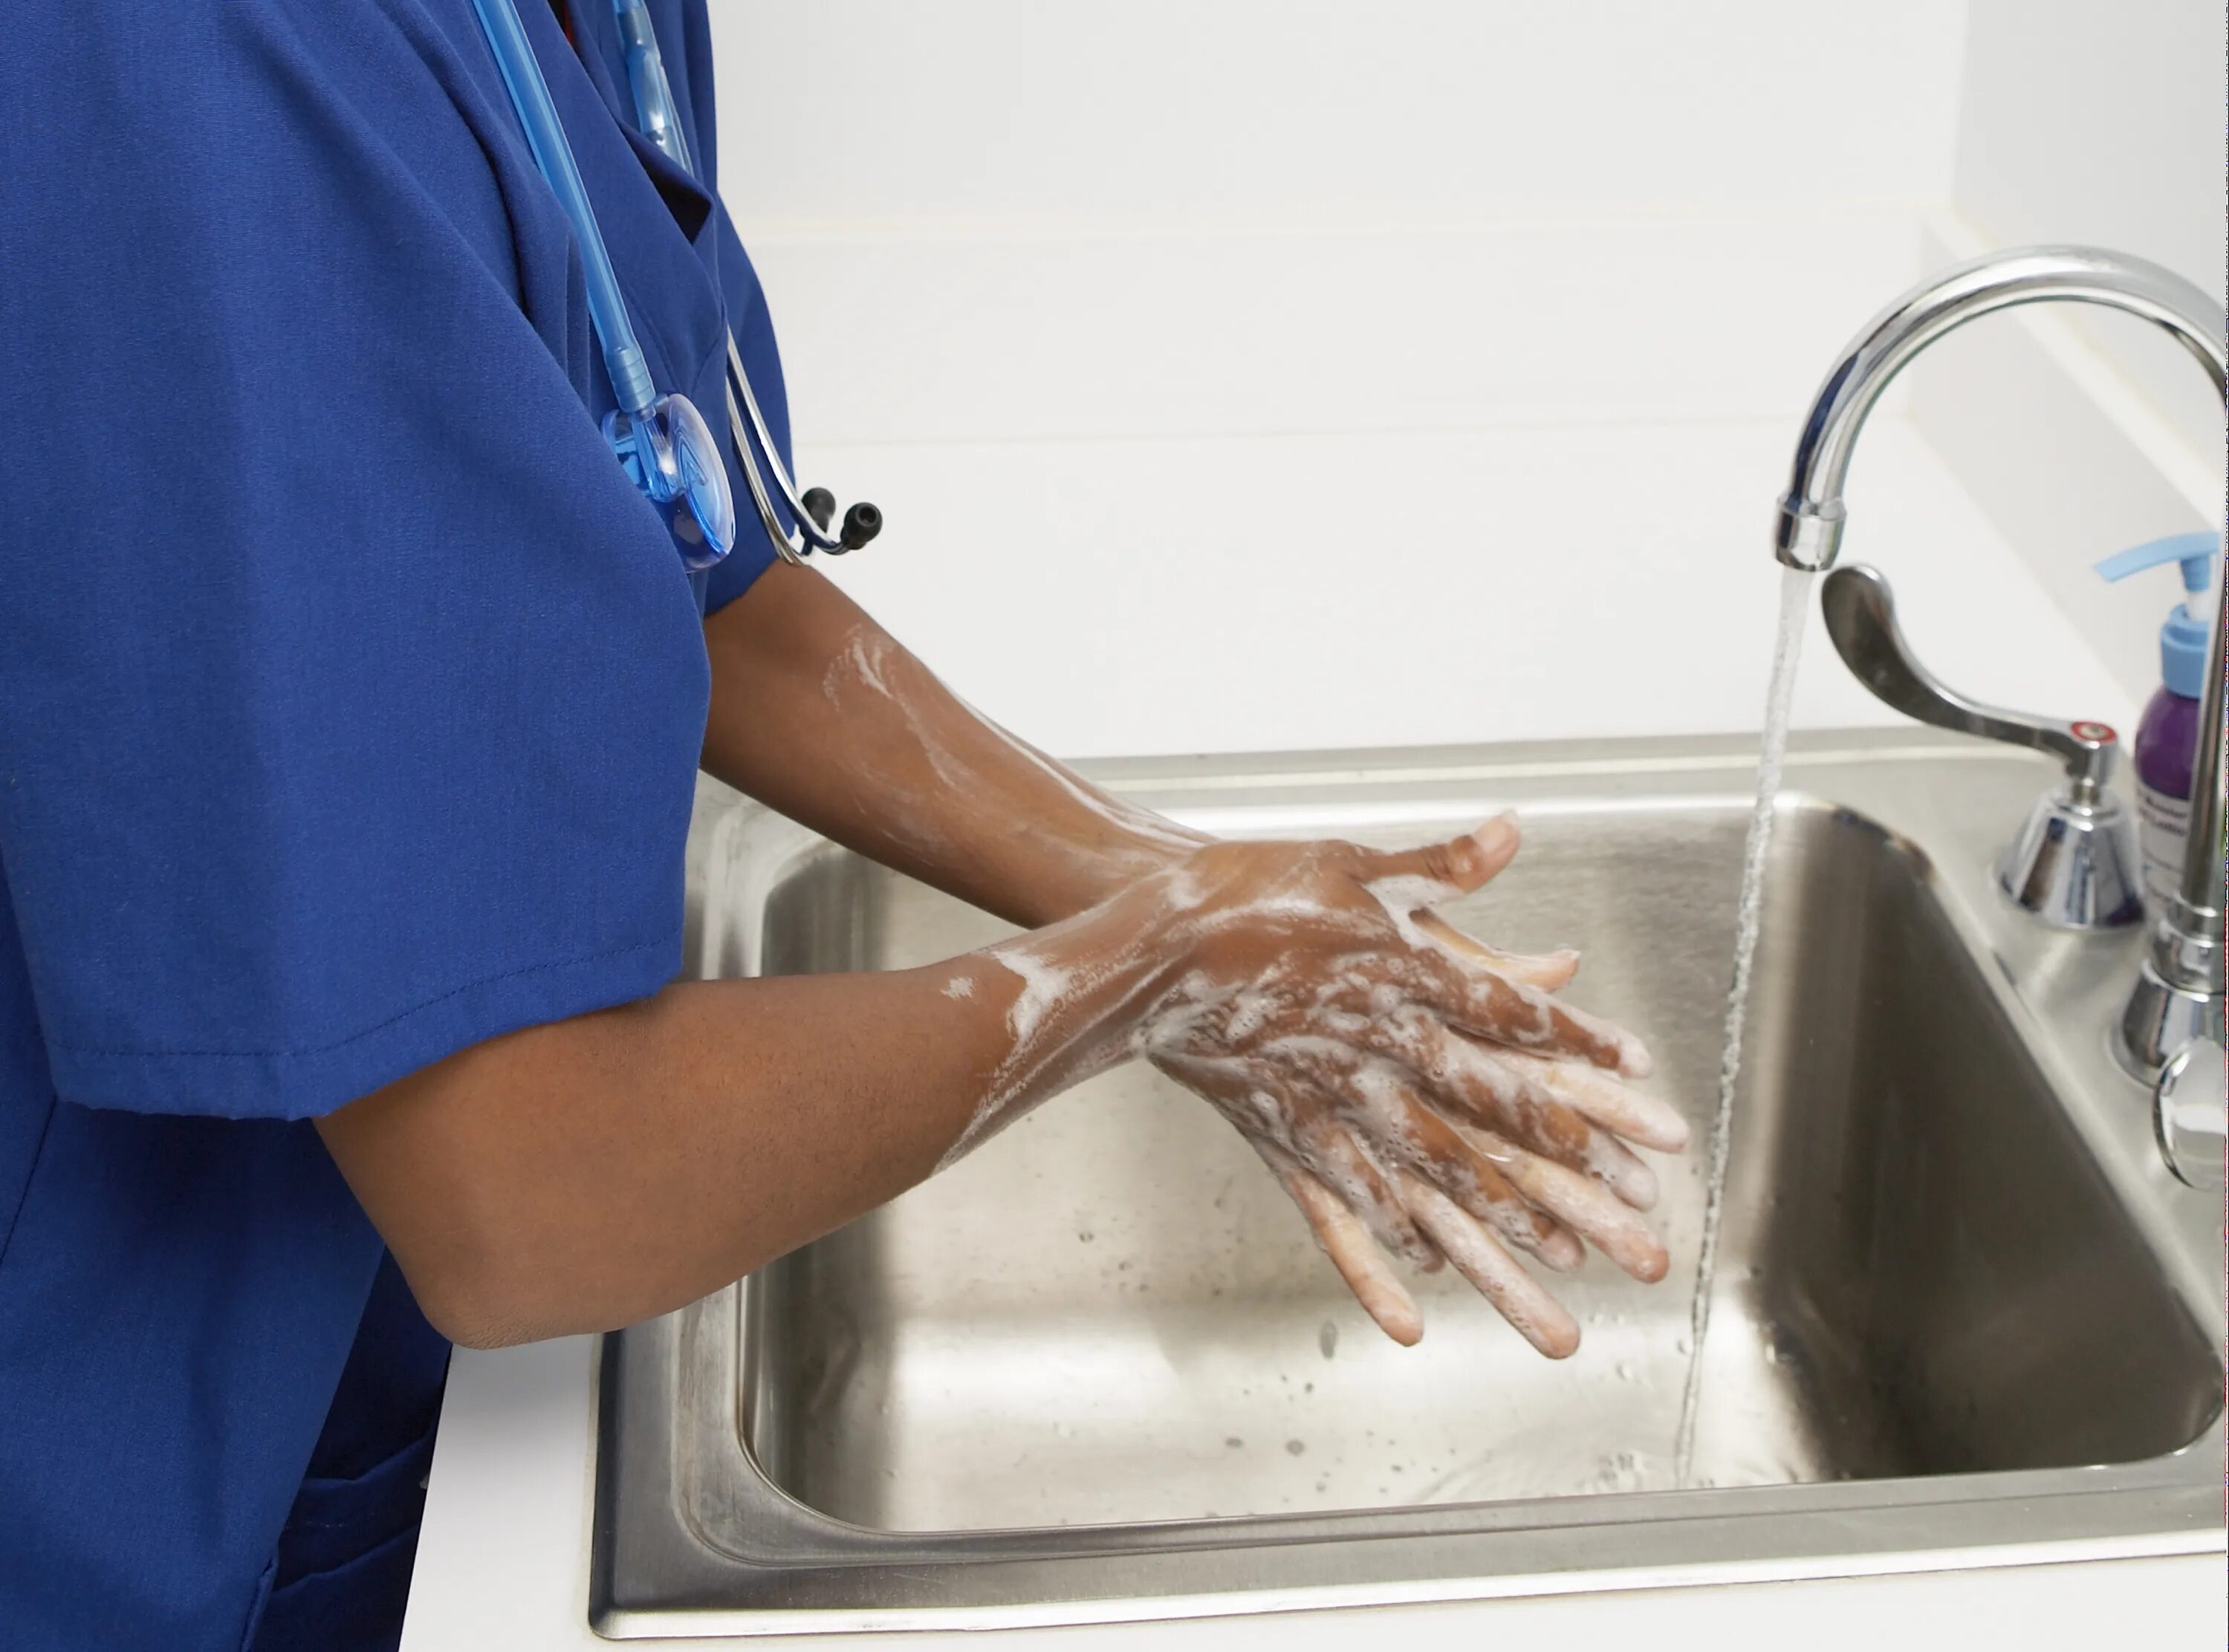 We wash hands. Гигиена Эстетика. Hand washing Hygiene. Личная гигиена Эстетика. Диспенсер Wash your hand.